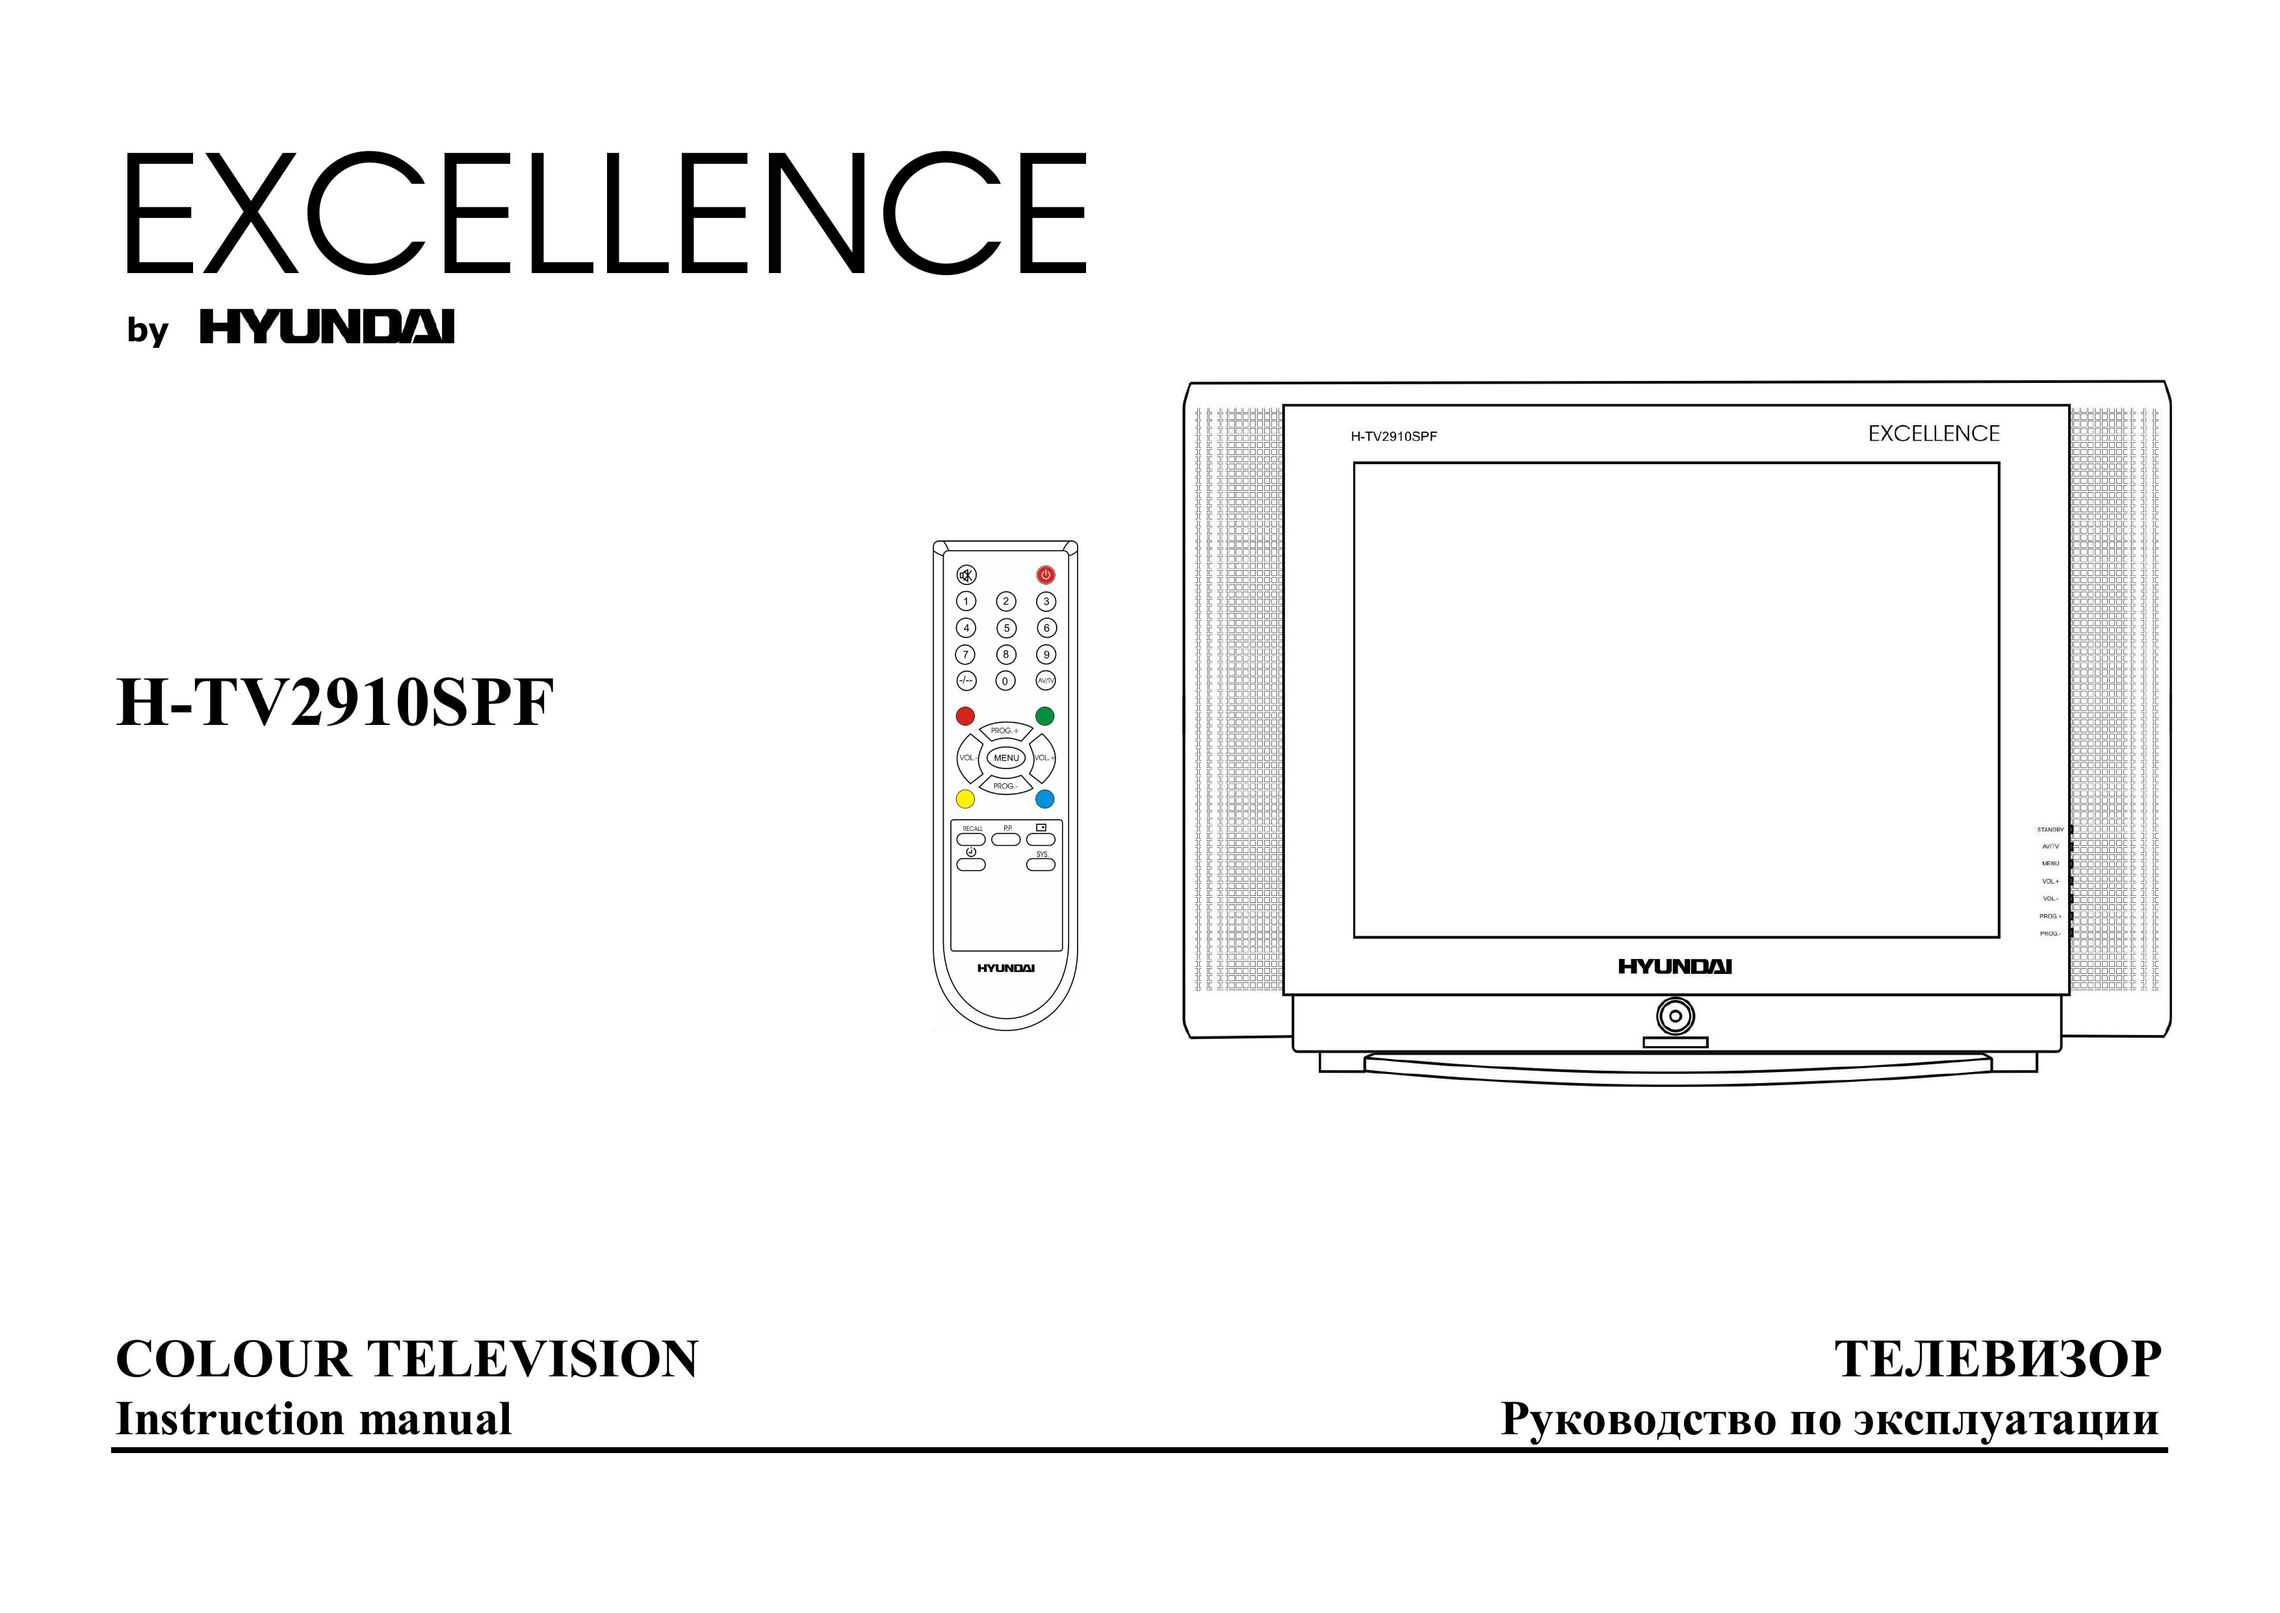 Hyundai H-TV2910SPF CRT Television User Manual